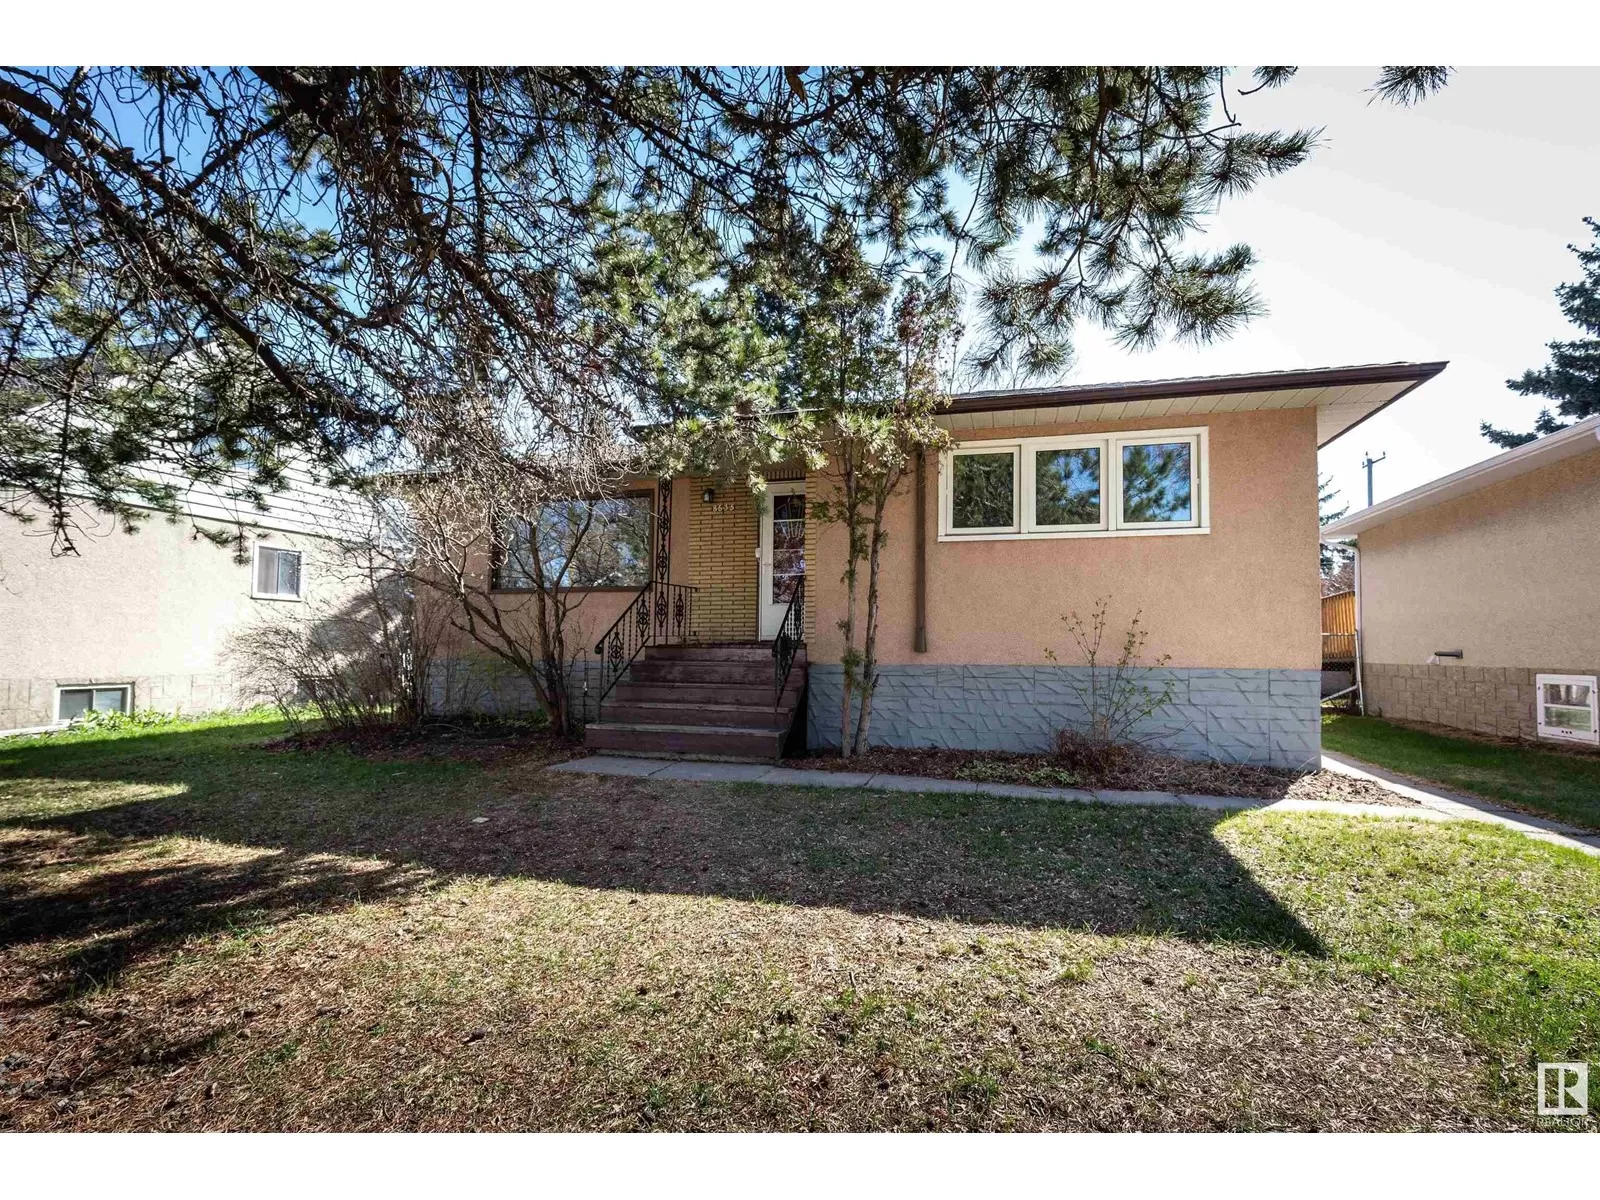 House for rent: 8635 76 St Nw, Edmonton, Alberta T6C 2K1